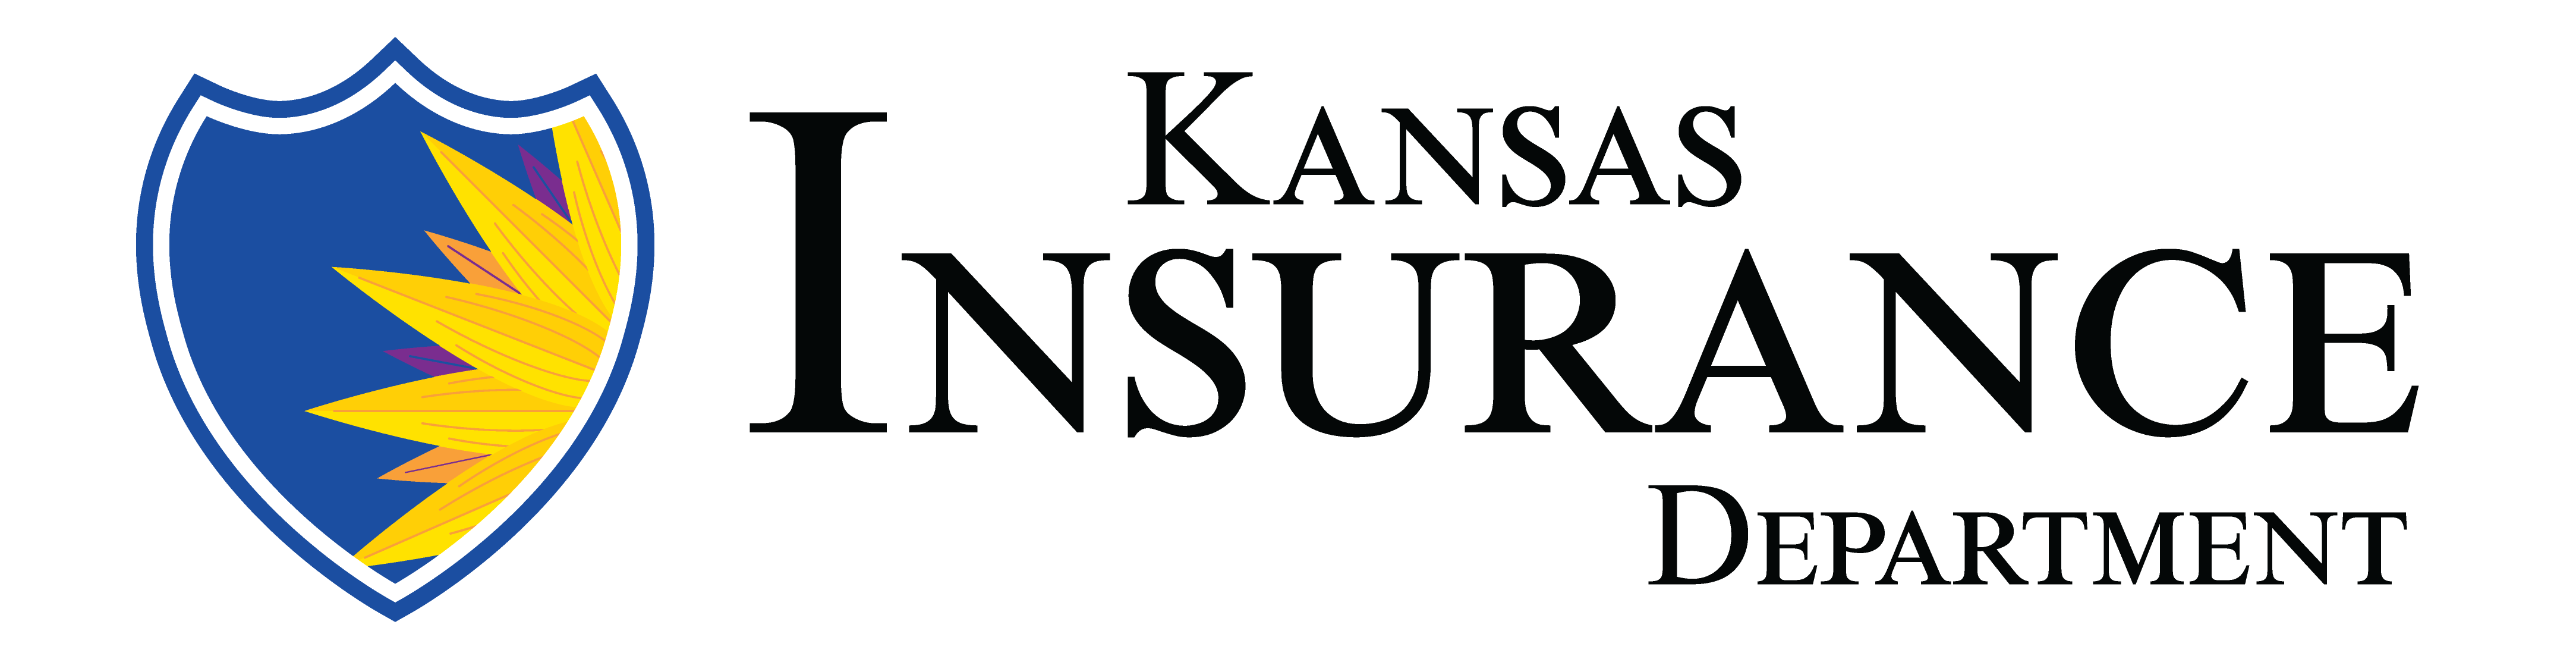 Kansas Department of Insurance